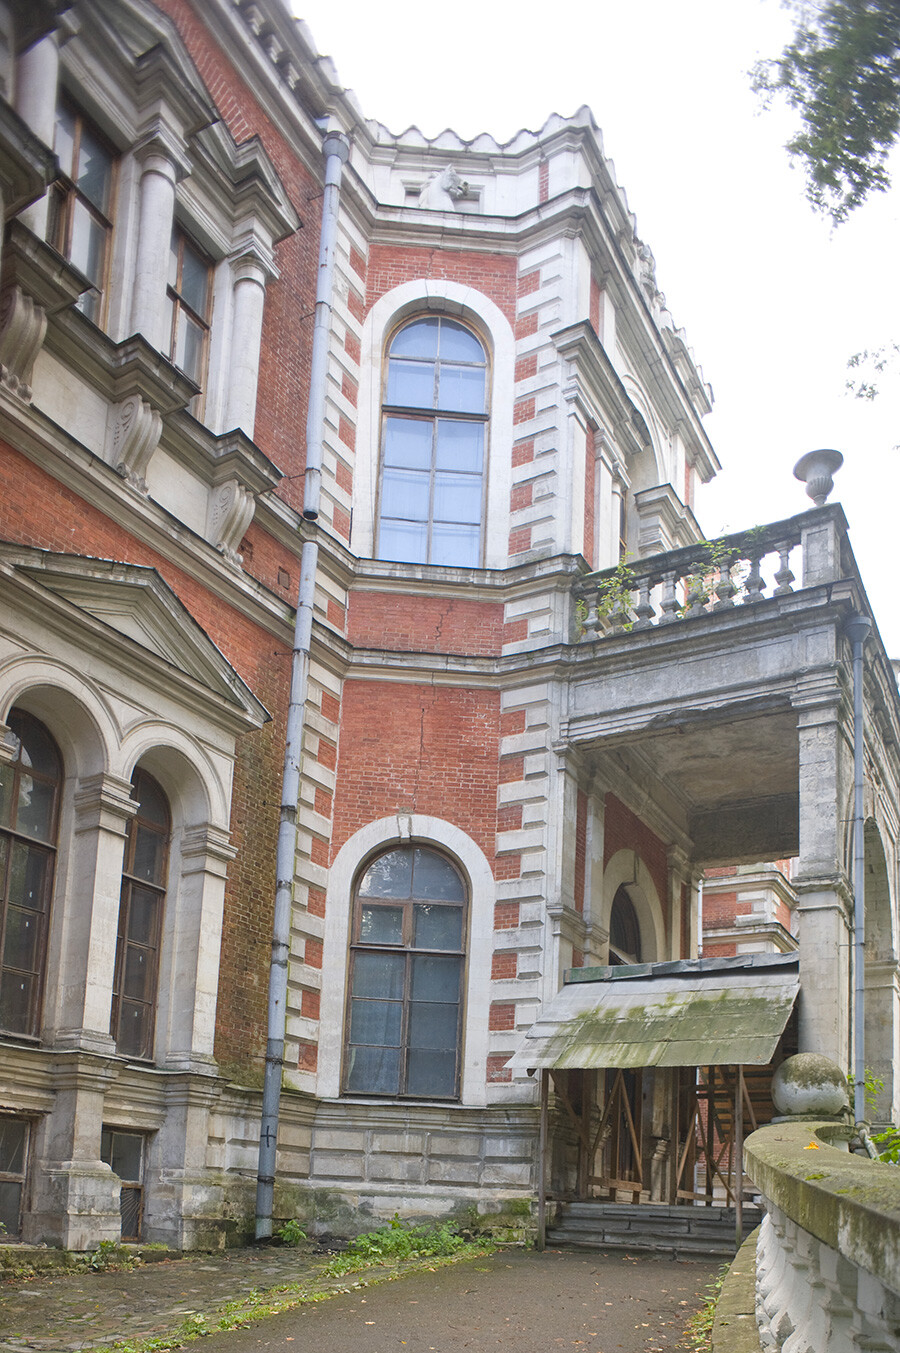 Vorontsov-Dashkov mansion. North facade with main entrance. August 30, 2014.